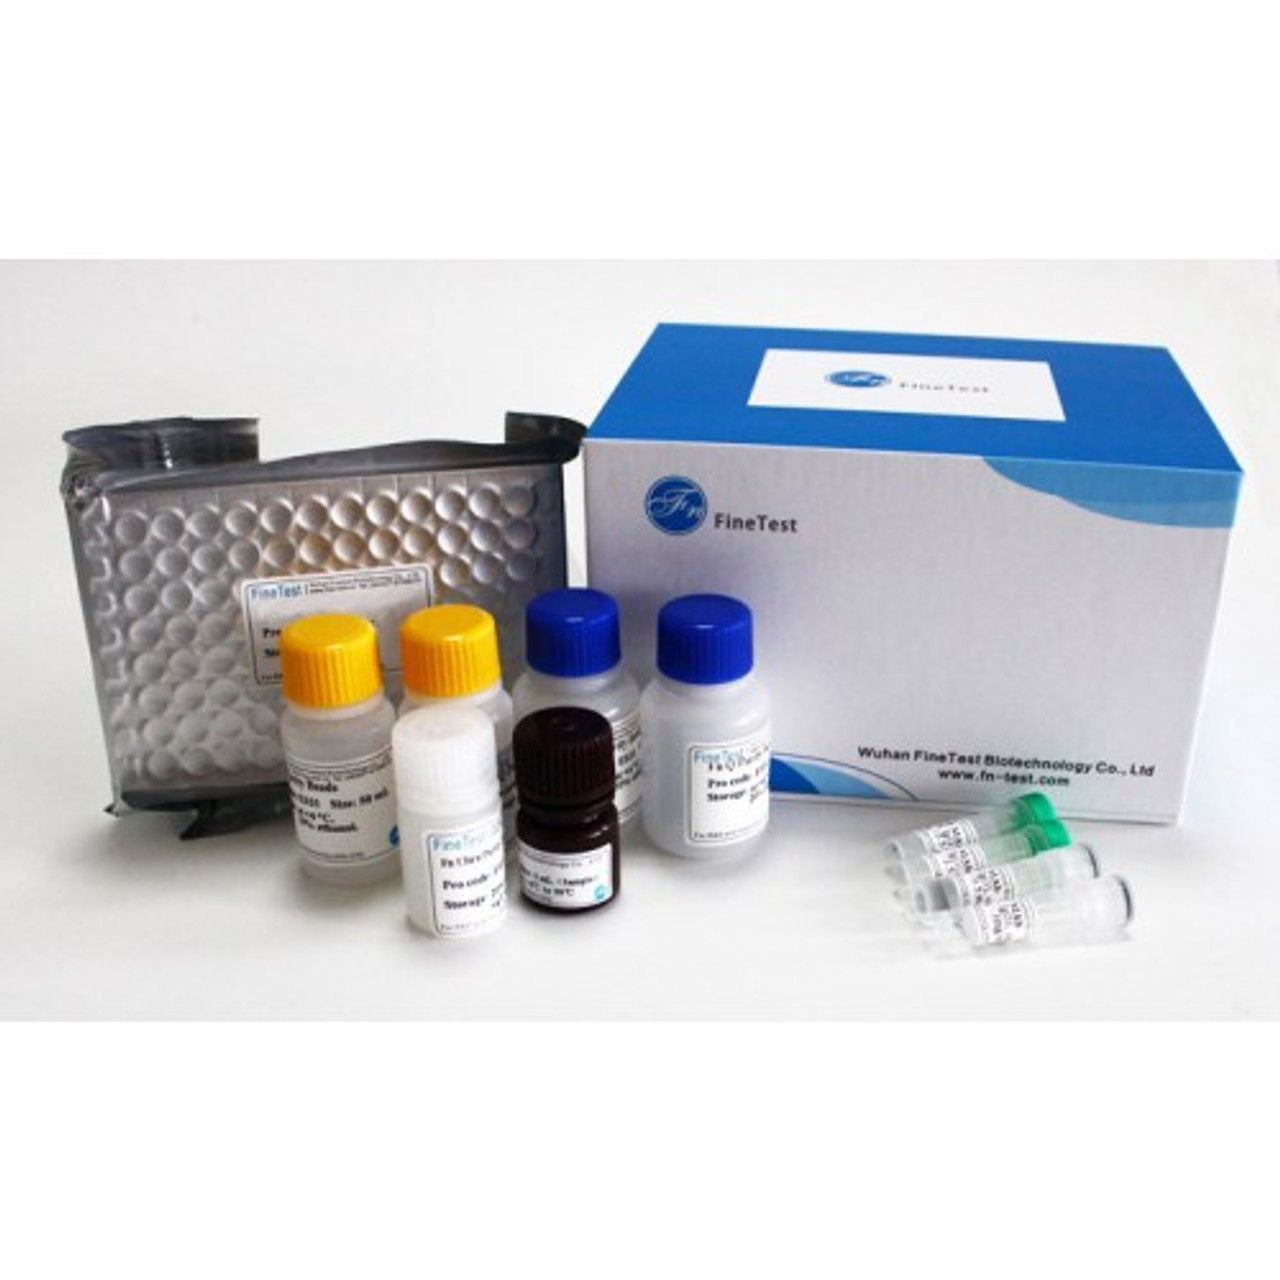 Human SPTβN4(Spectrin Beta, Non Erythrocytic 4) ELISA Kit